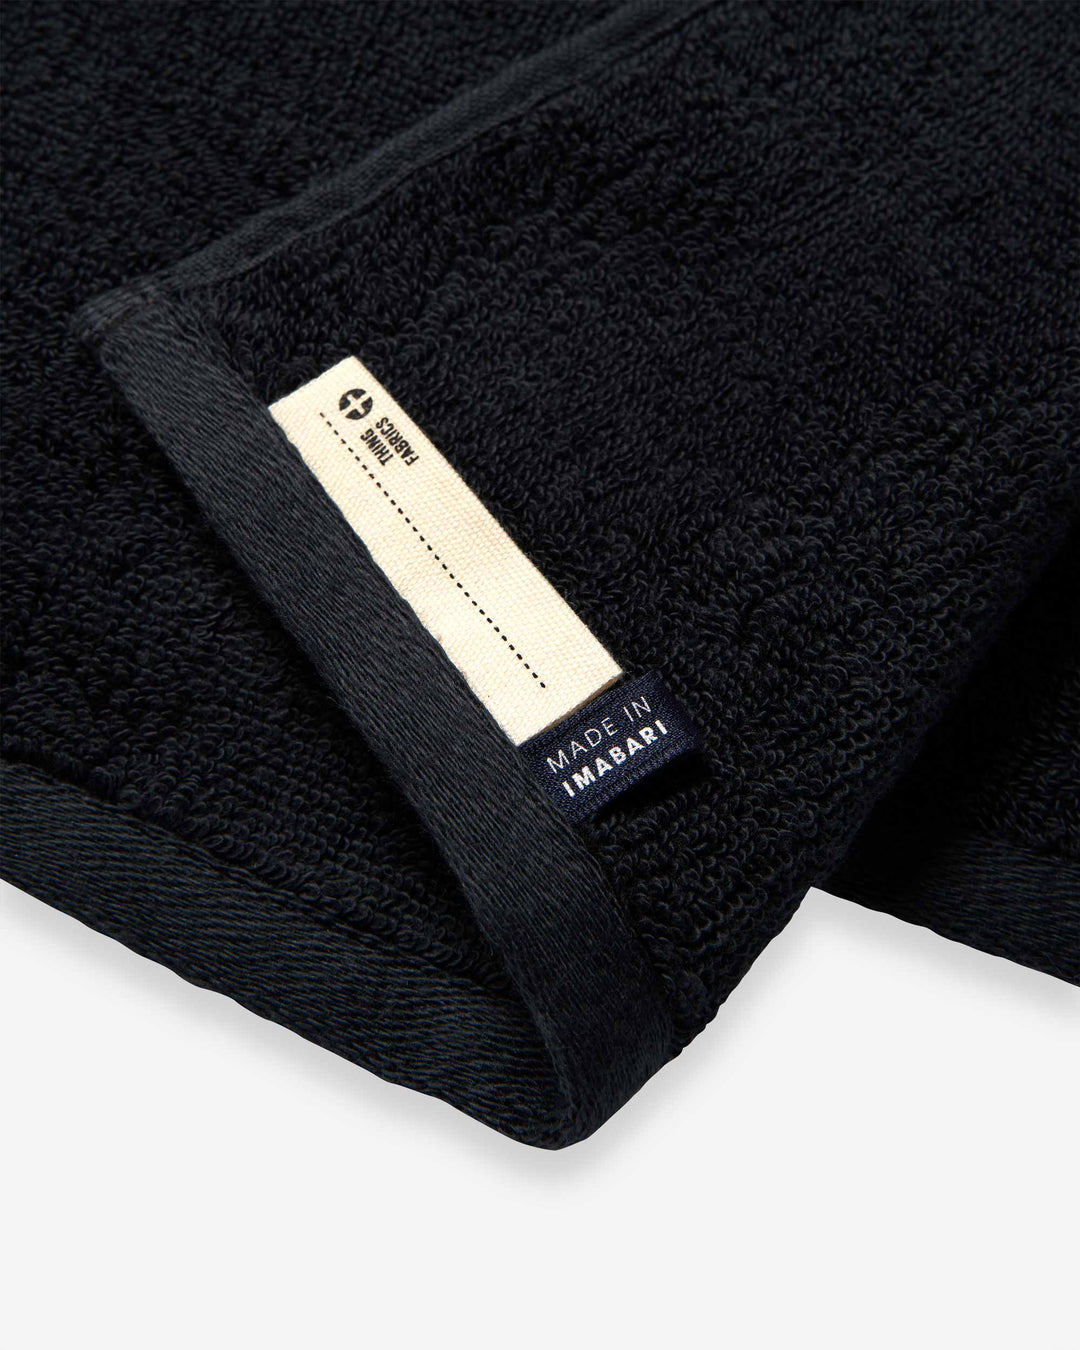 TIP TOP 365 Towel Gift Box - Black